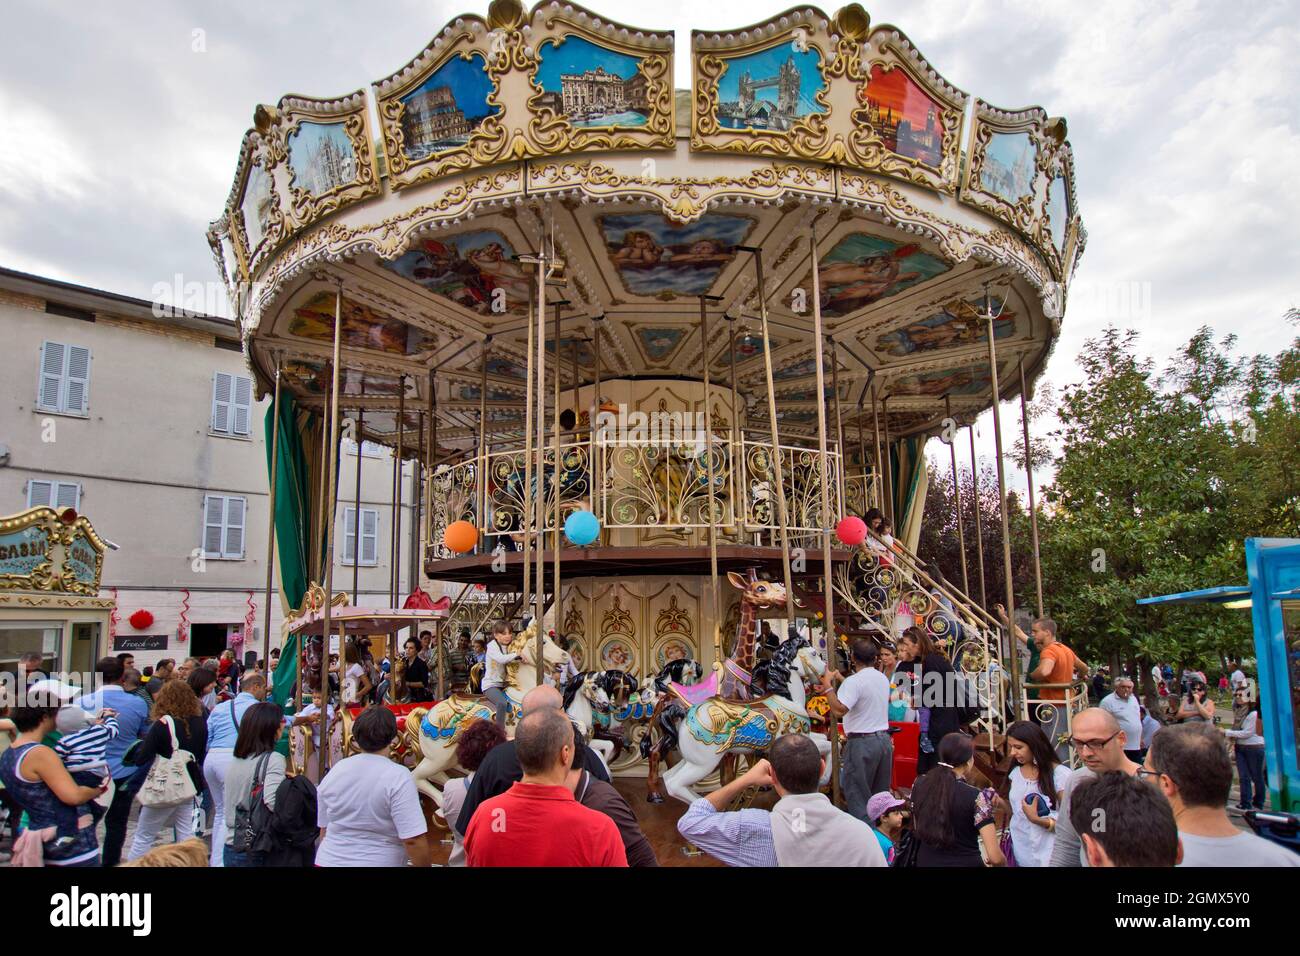 Clown&Clown Festival , Carousel for children, People, Monte San Giusto, Macerata, Marche, Italy, Europe Stock Photo